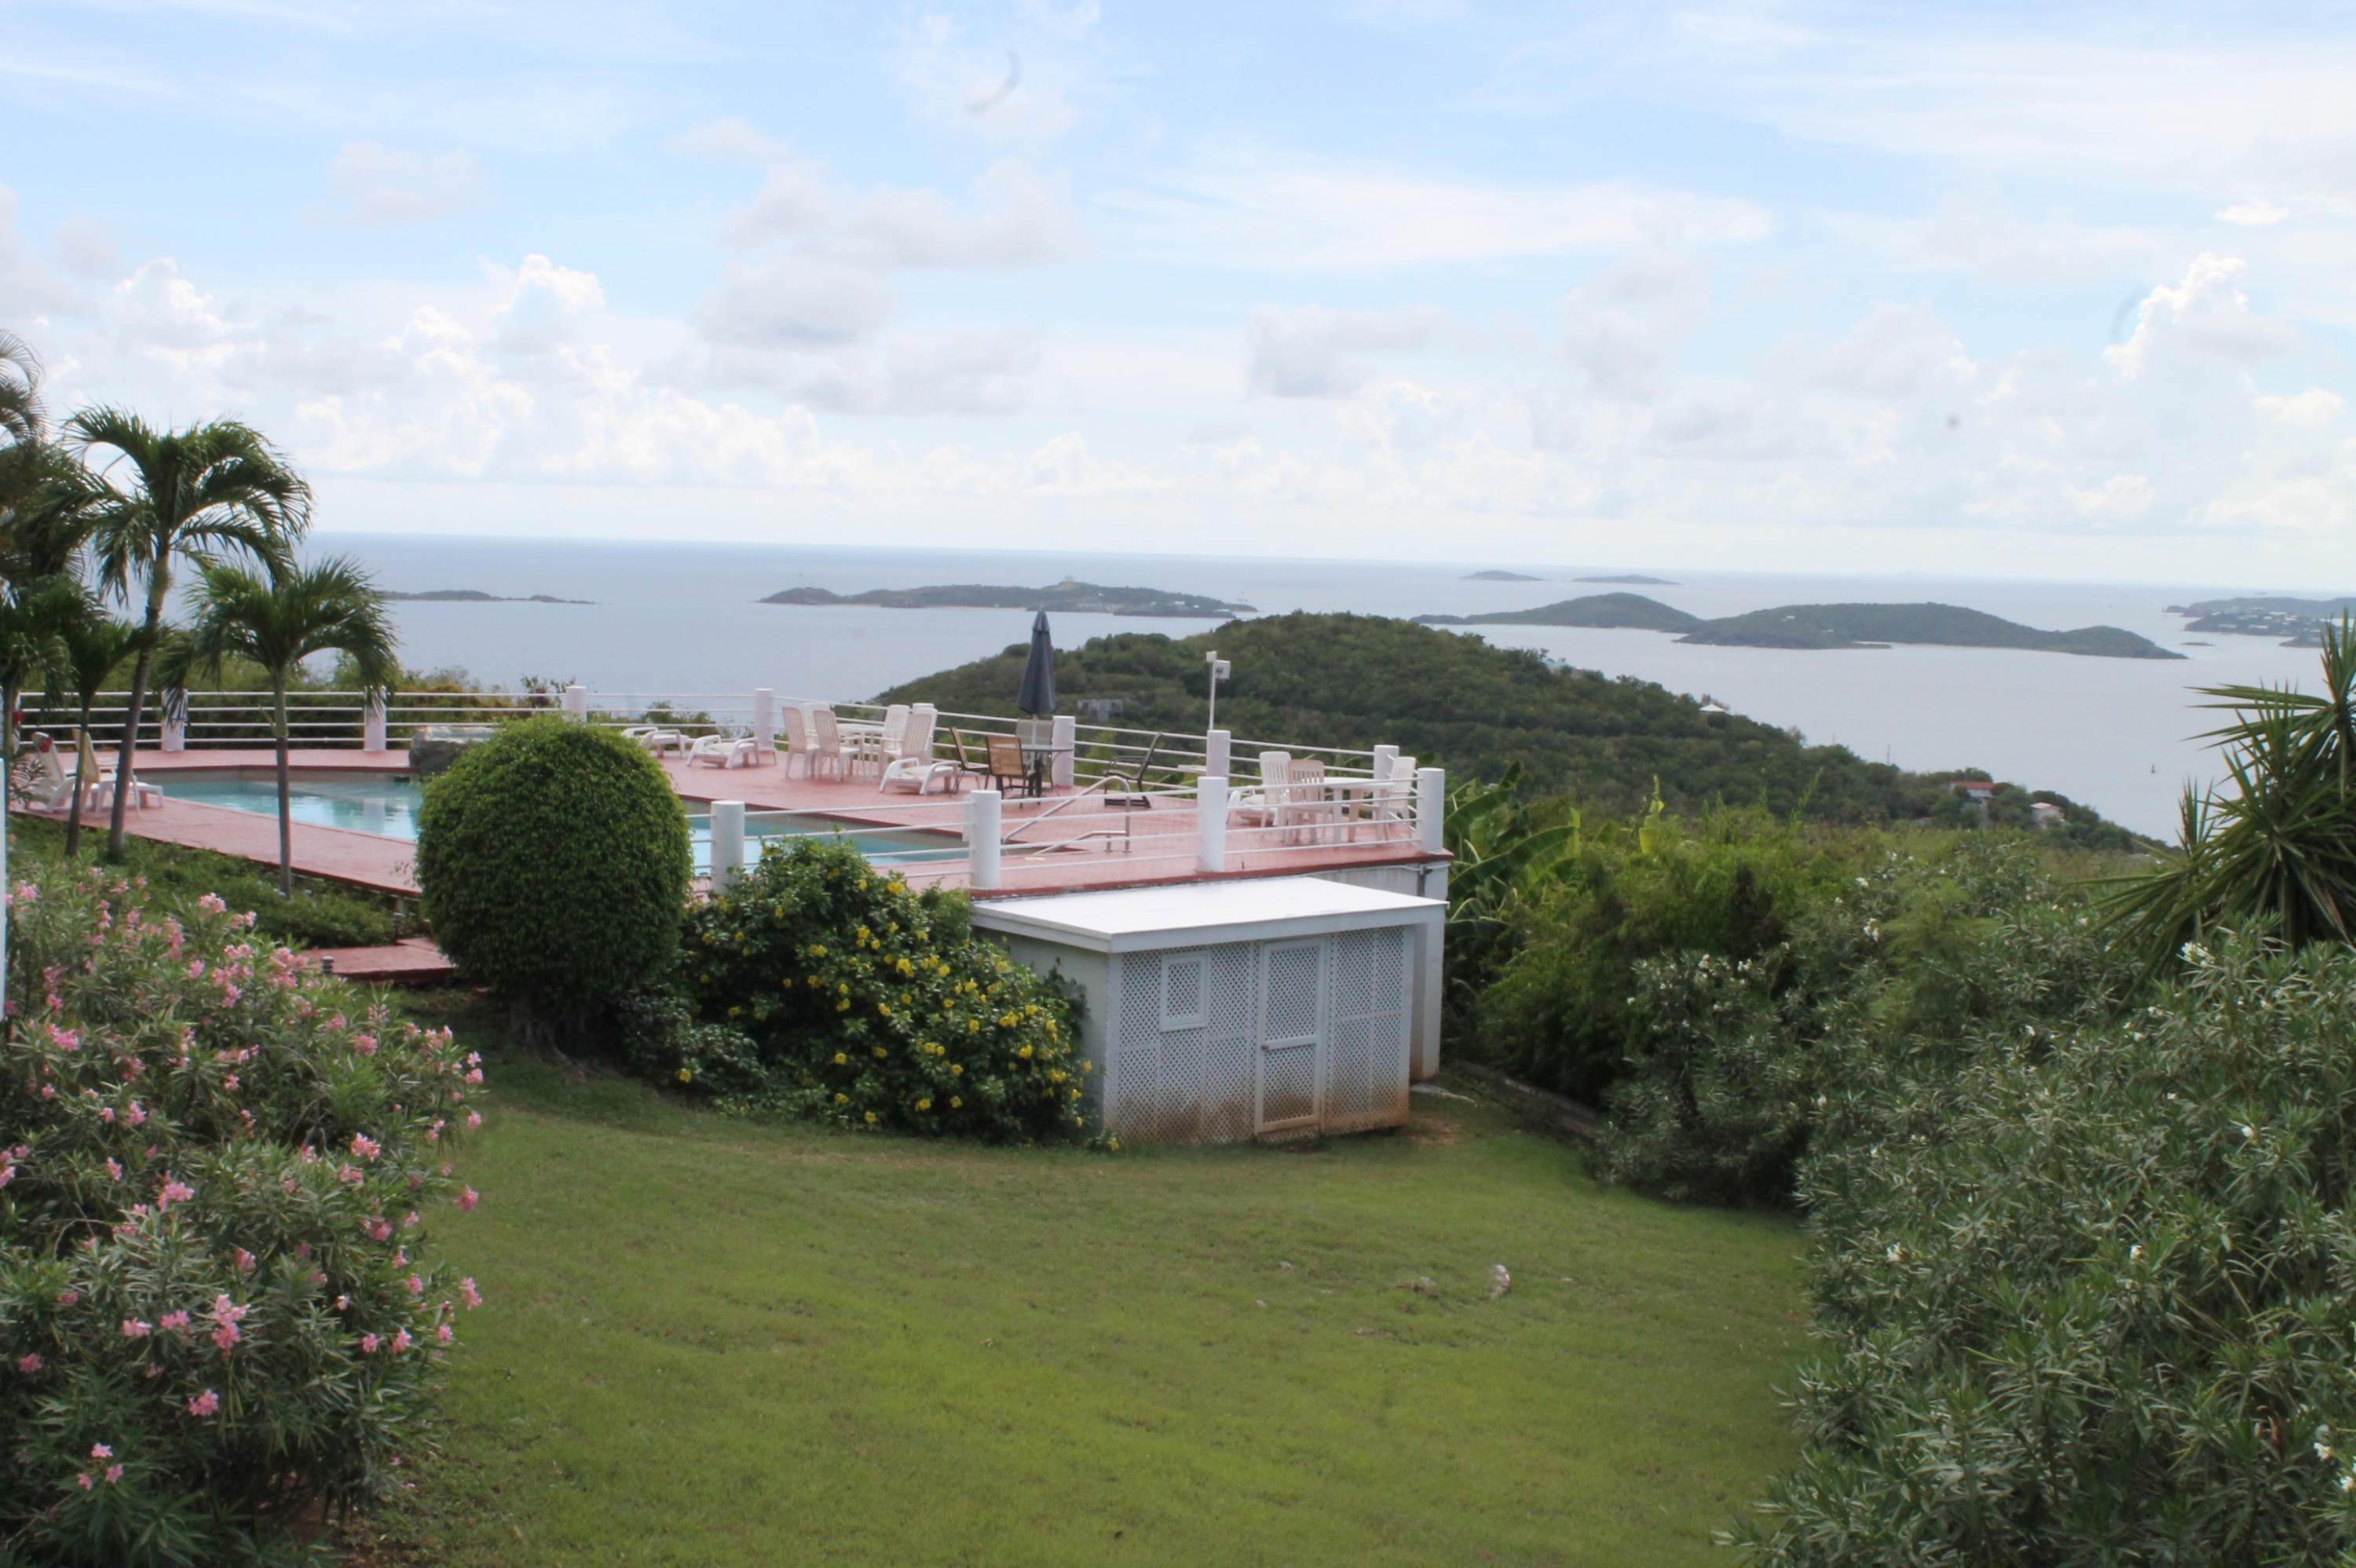 9. fractional ownership prop for Sale at Bethany St John, Virgin Islands 00830 United States Virgin Islands